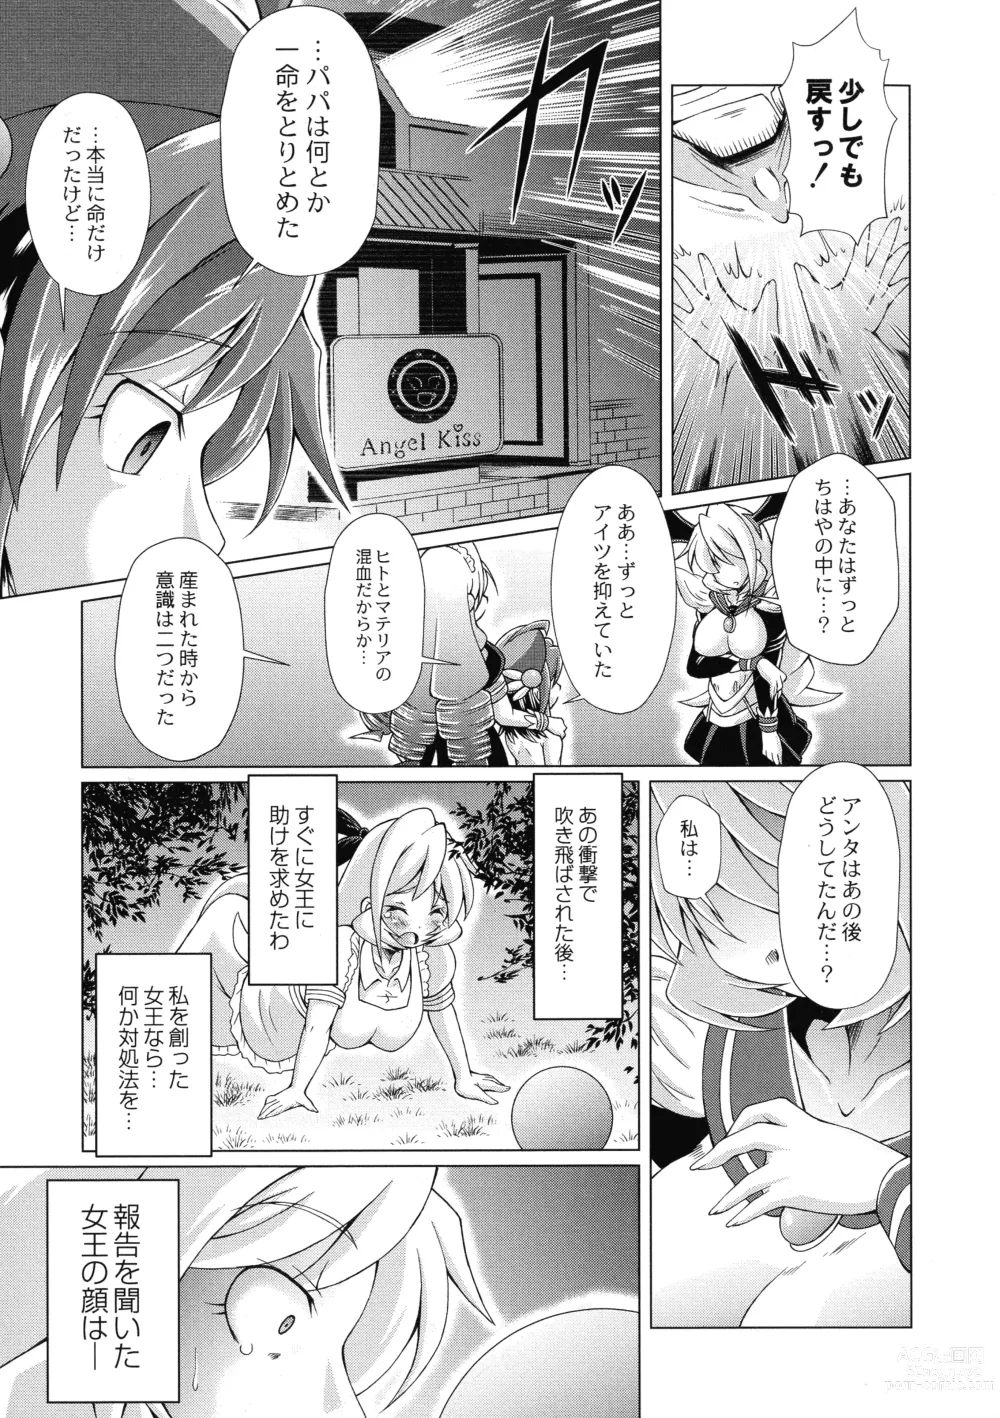 Page 185 of manga Magical Canaan Reboot